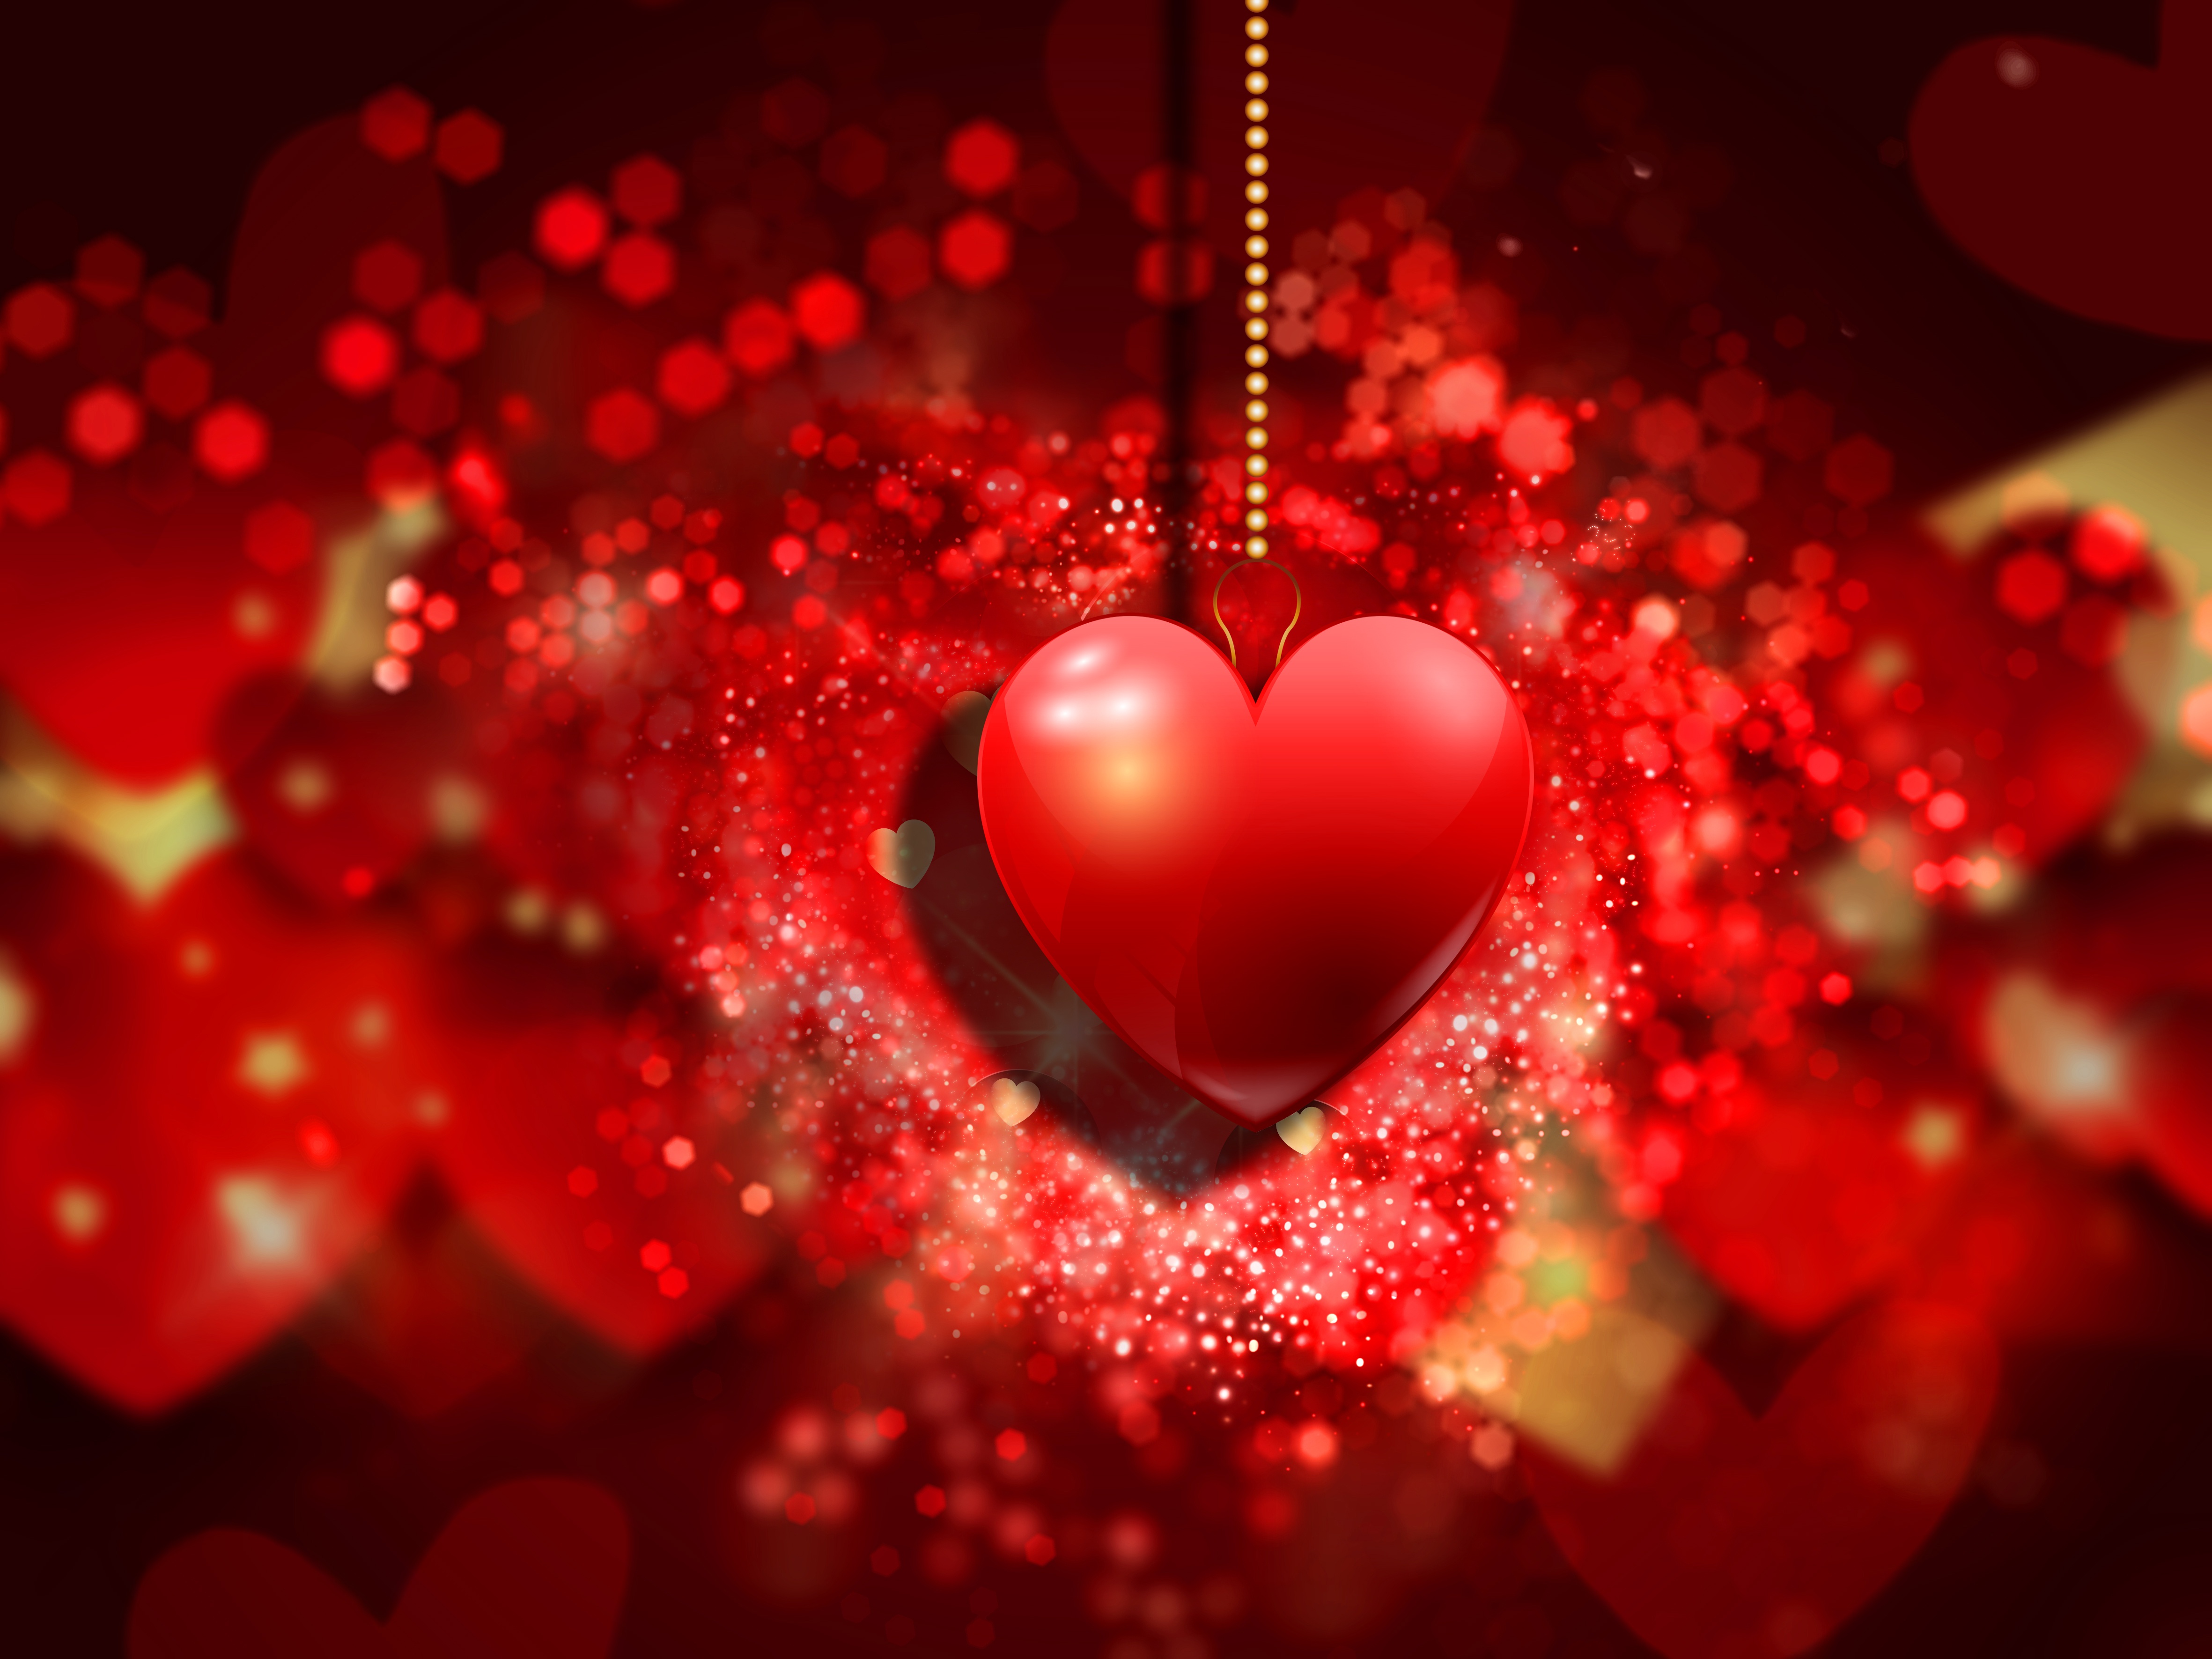 Heart Love Red Romantic 4724x3543